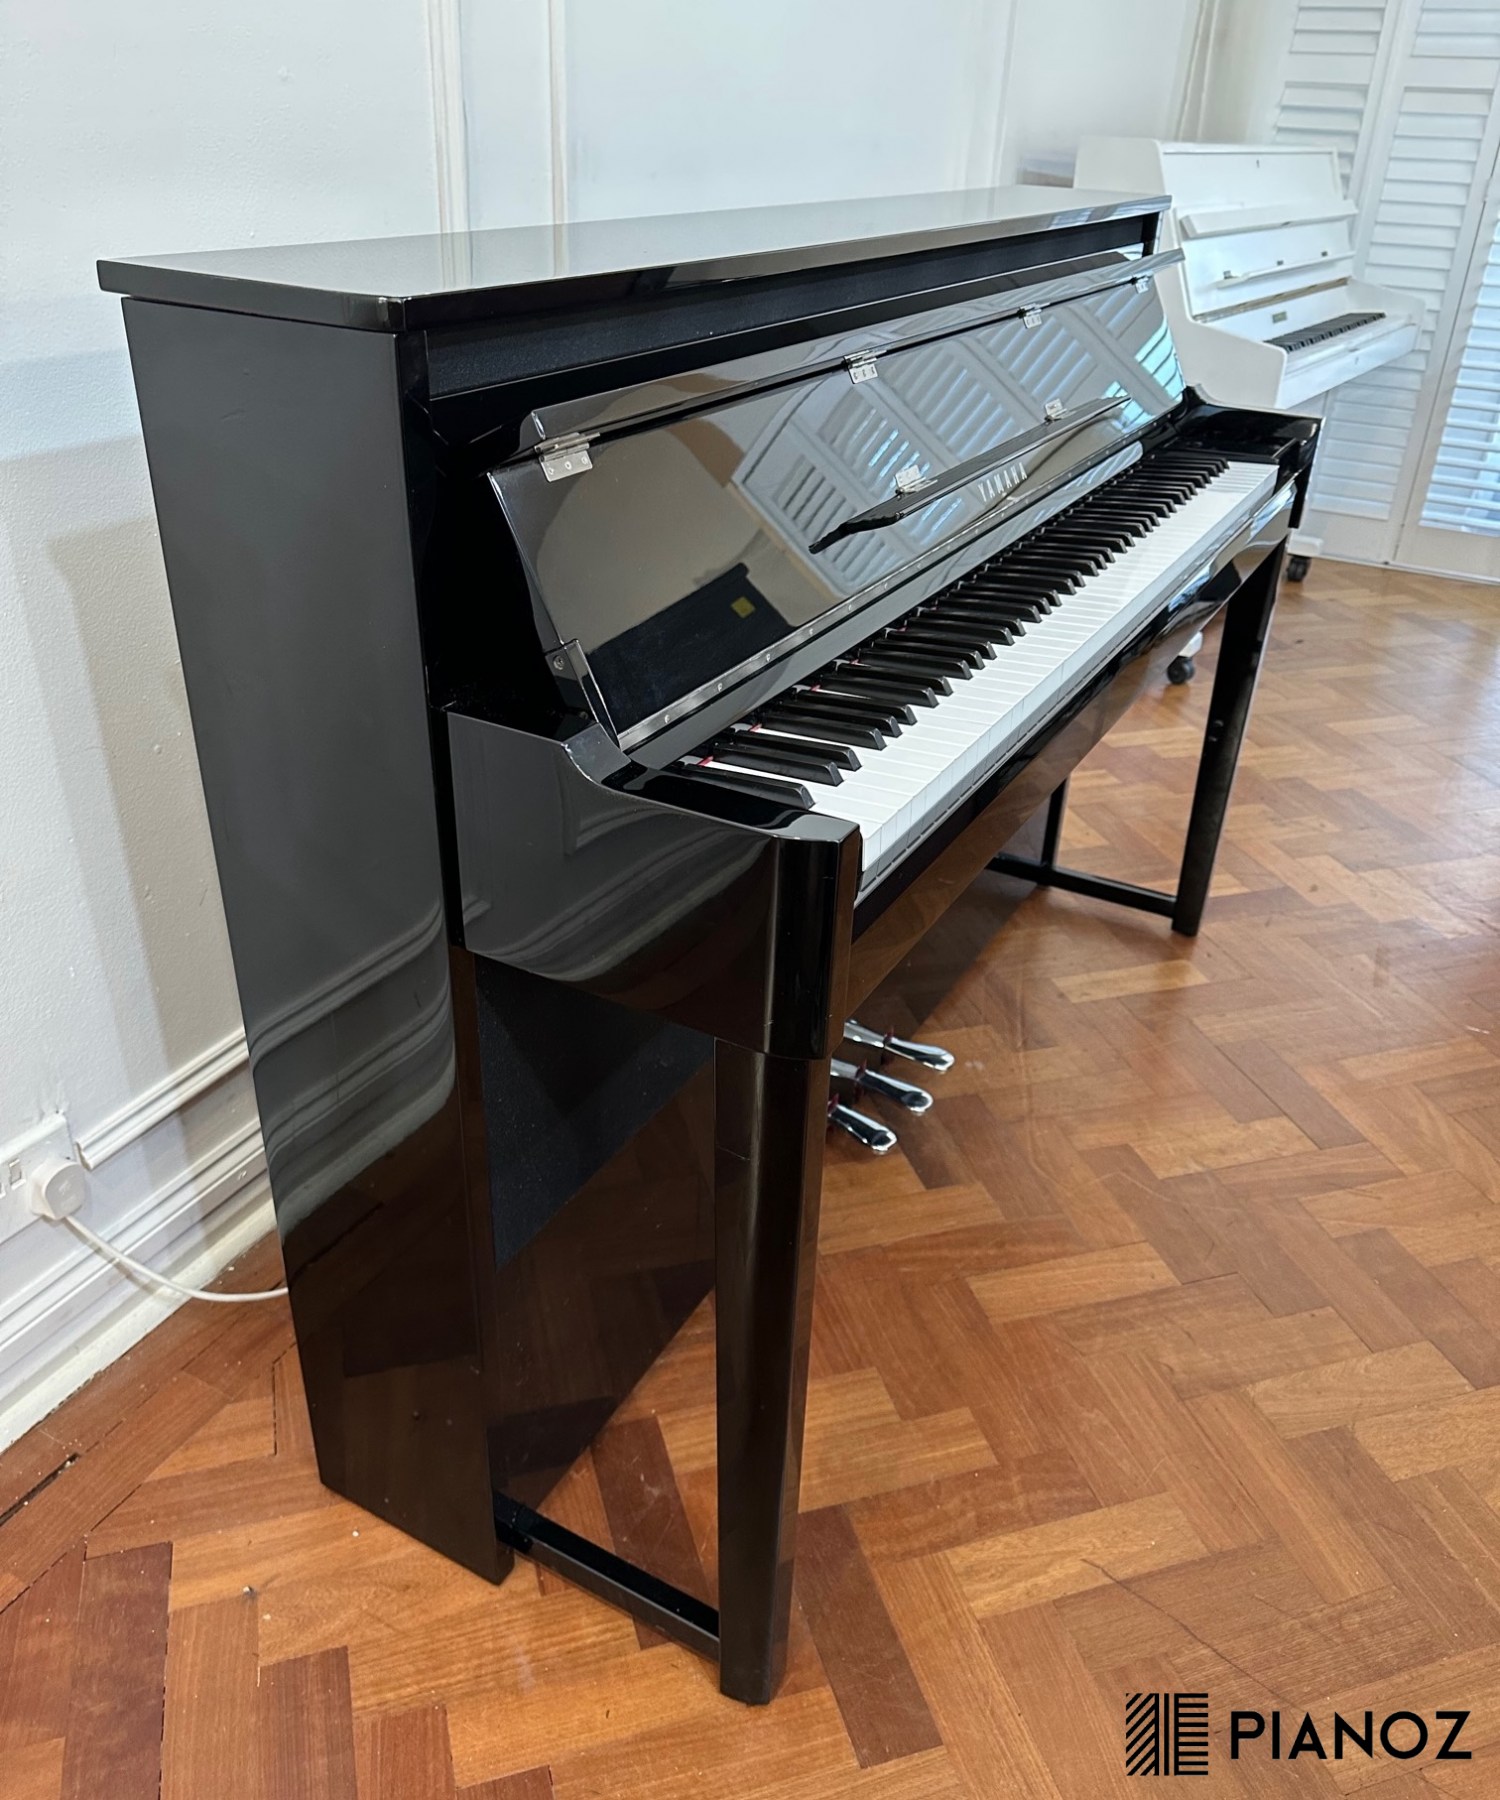 Yamaha NU1 Avantgrand Hybrid Digital Piano piano for sale in UK